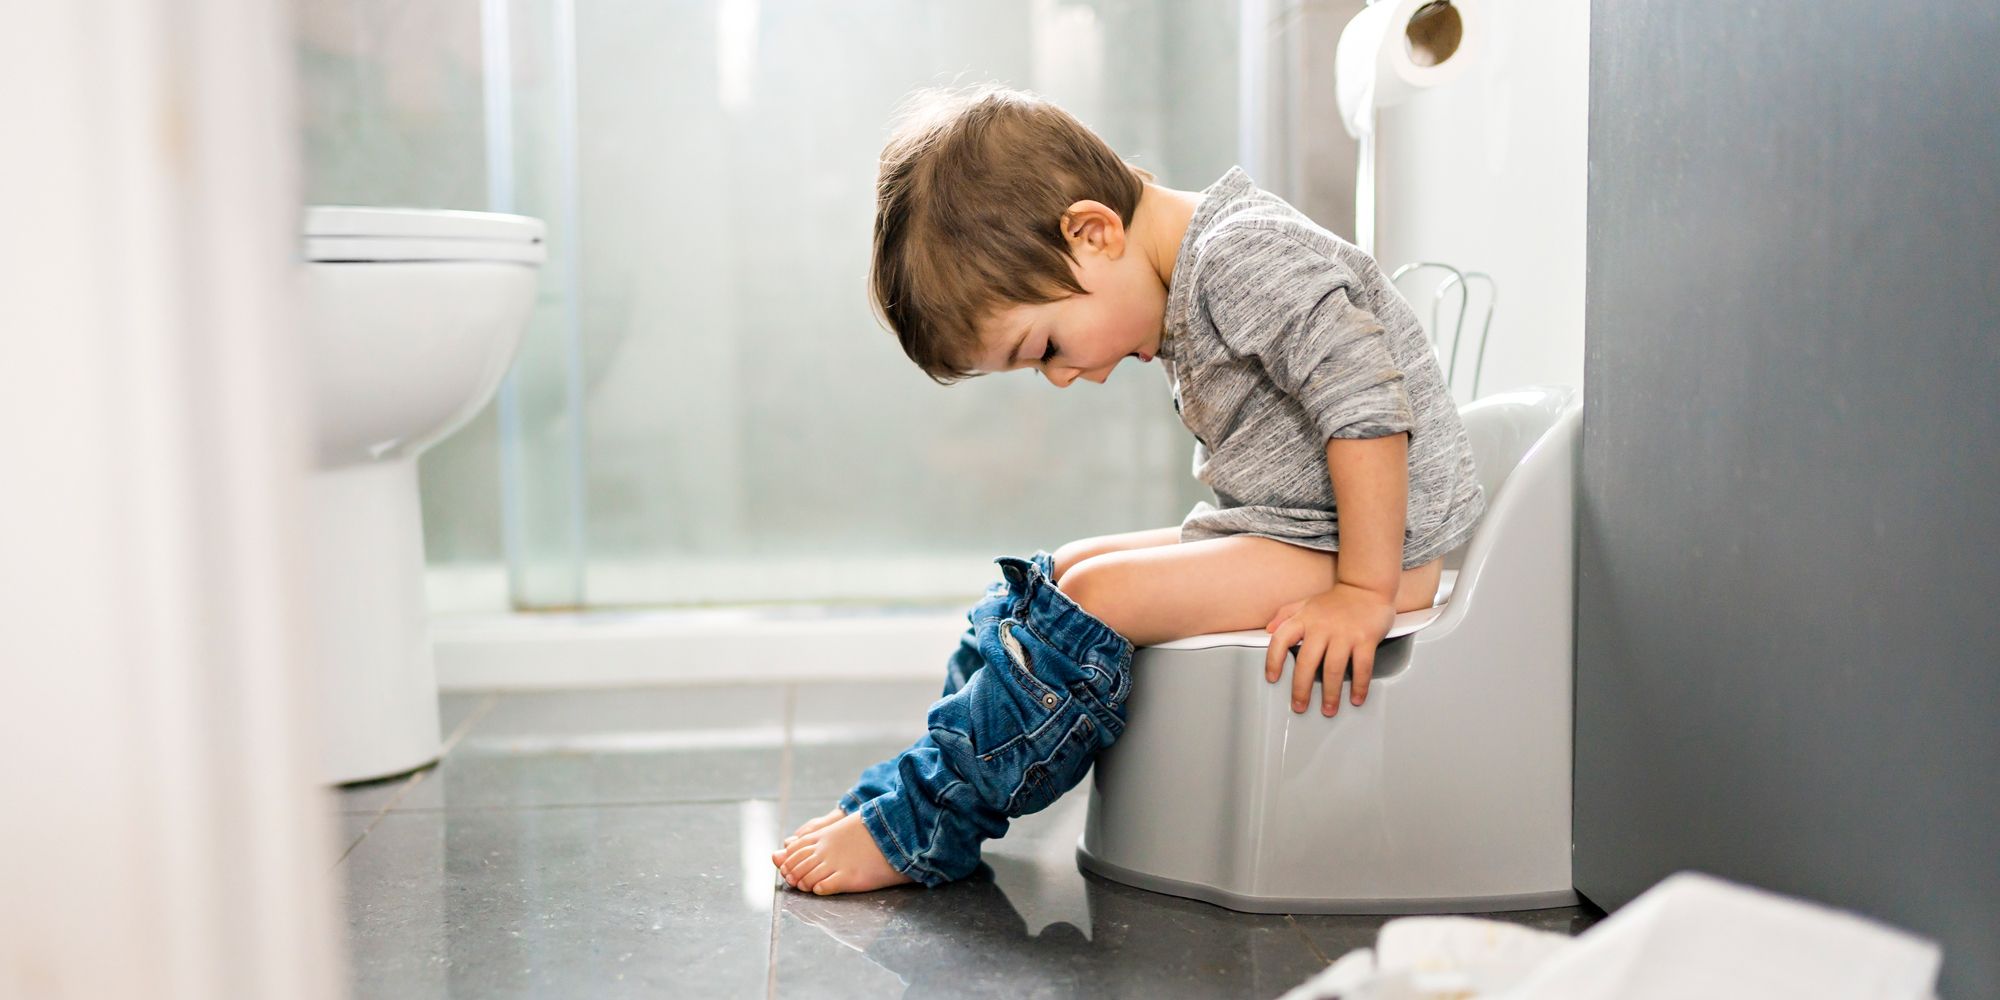 12M-5T Cotton Cloth Toddler Toilet Training Underwear AGUDAN Girls’ Potty Training Pants 6 Packs 